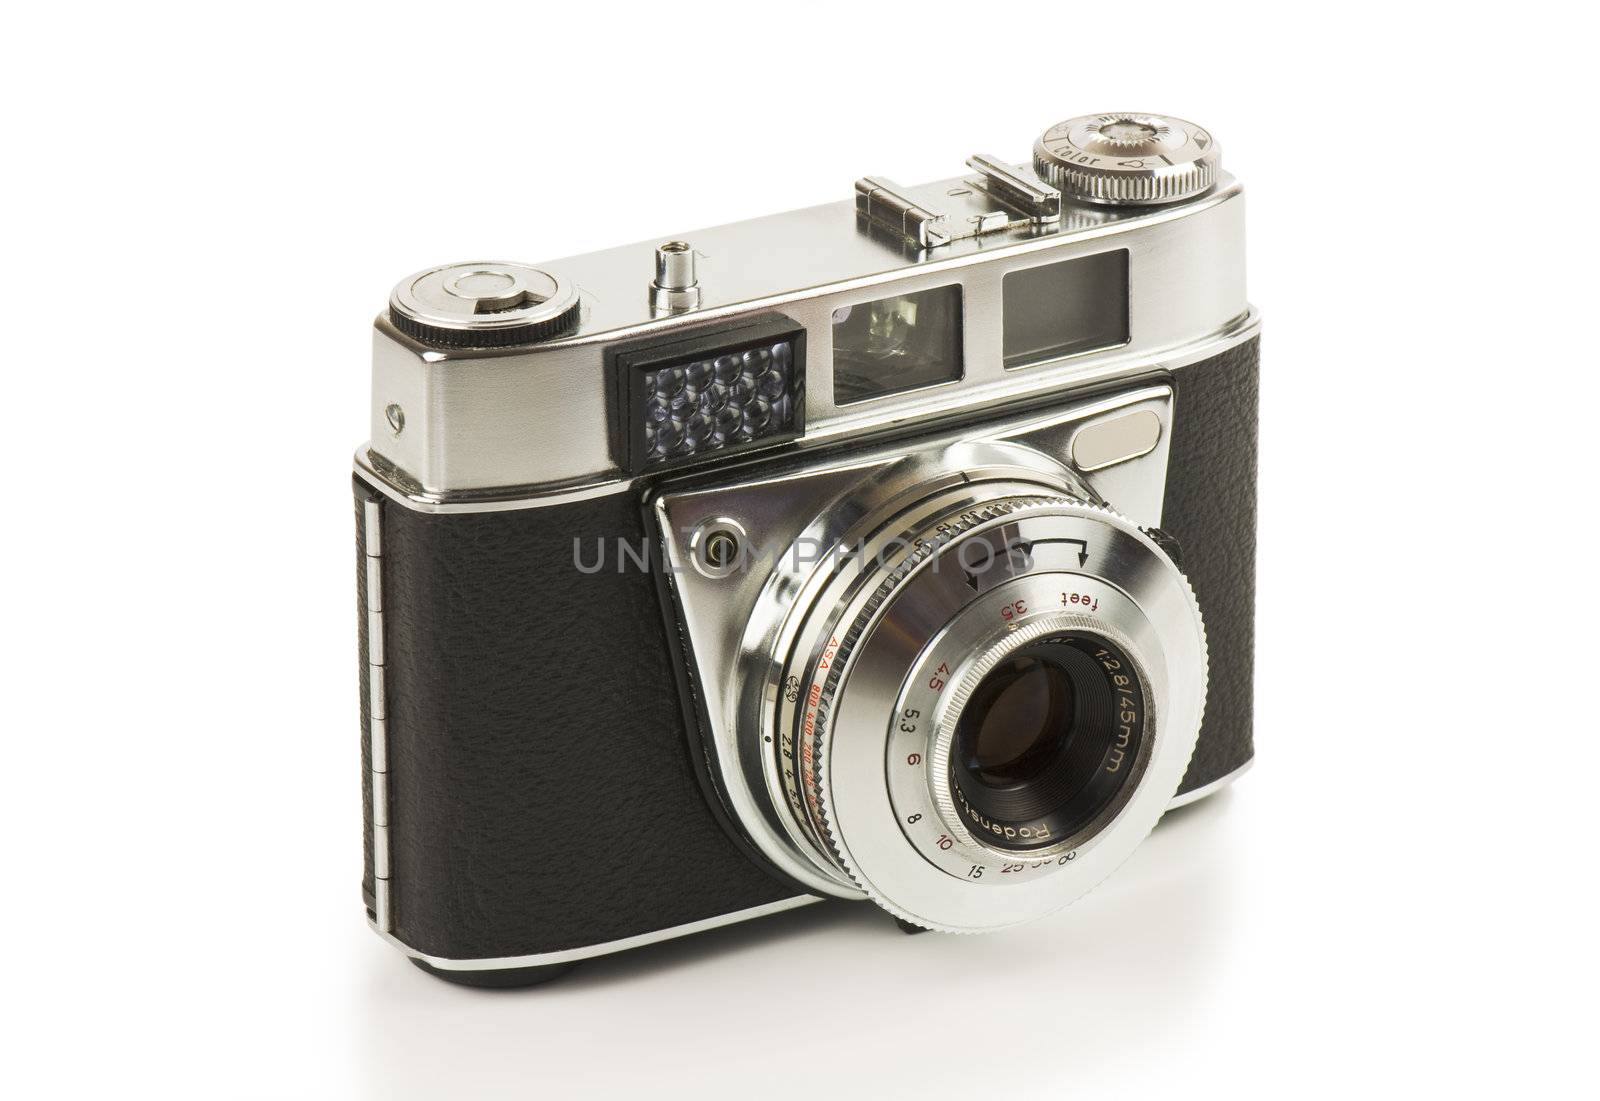 Vintage camera by dutourdumonde